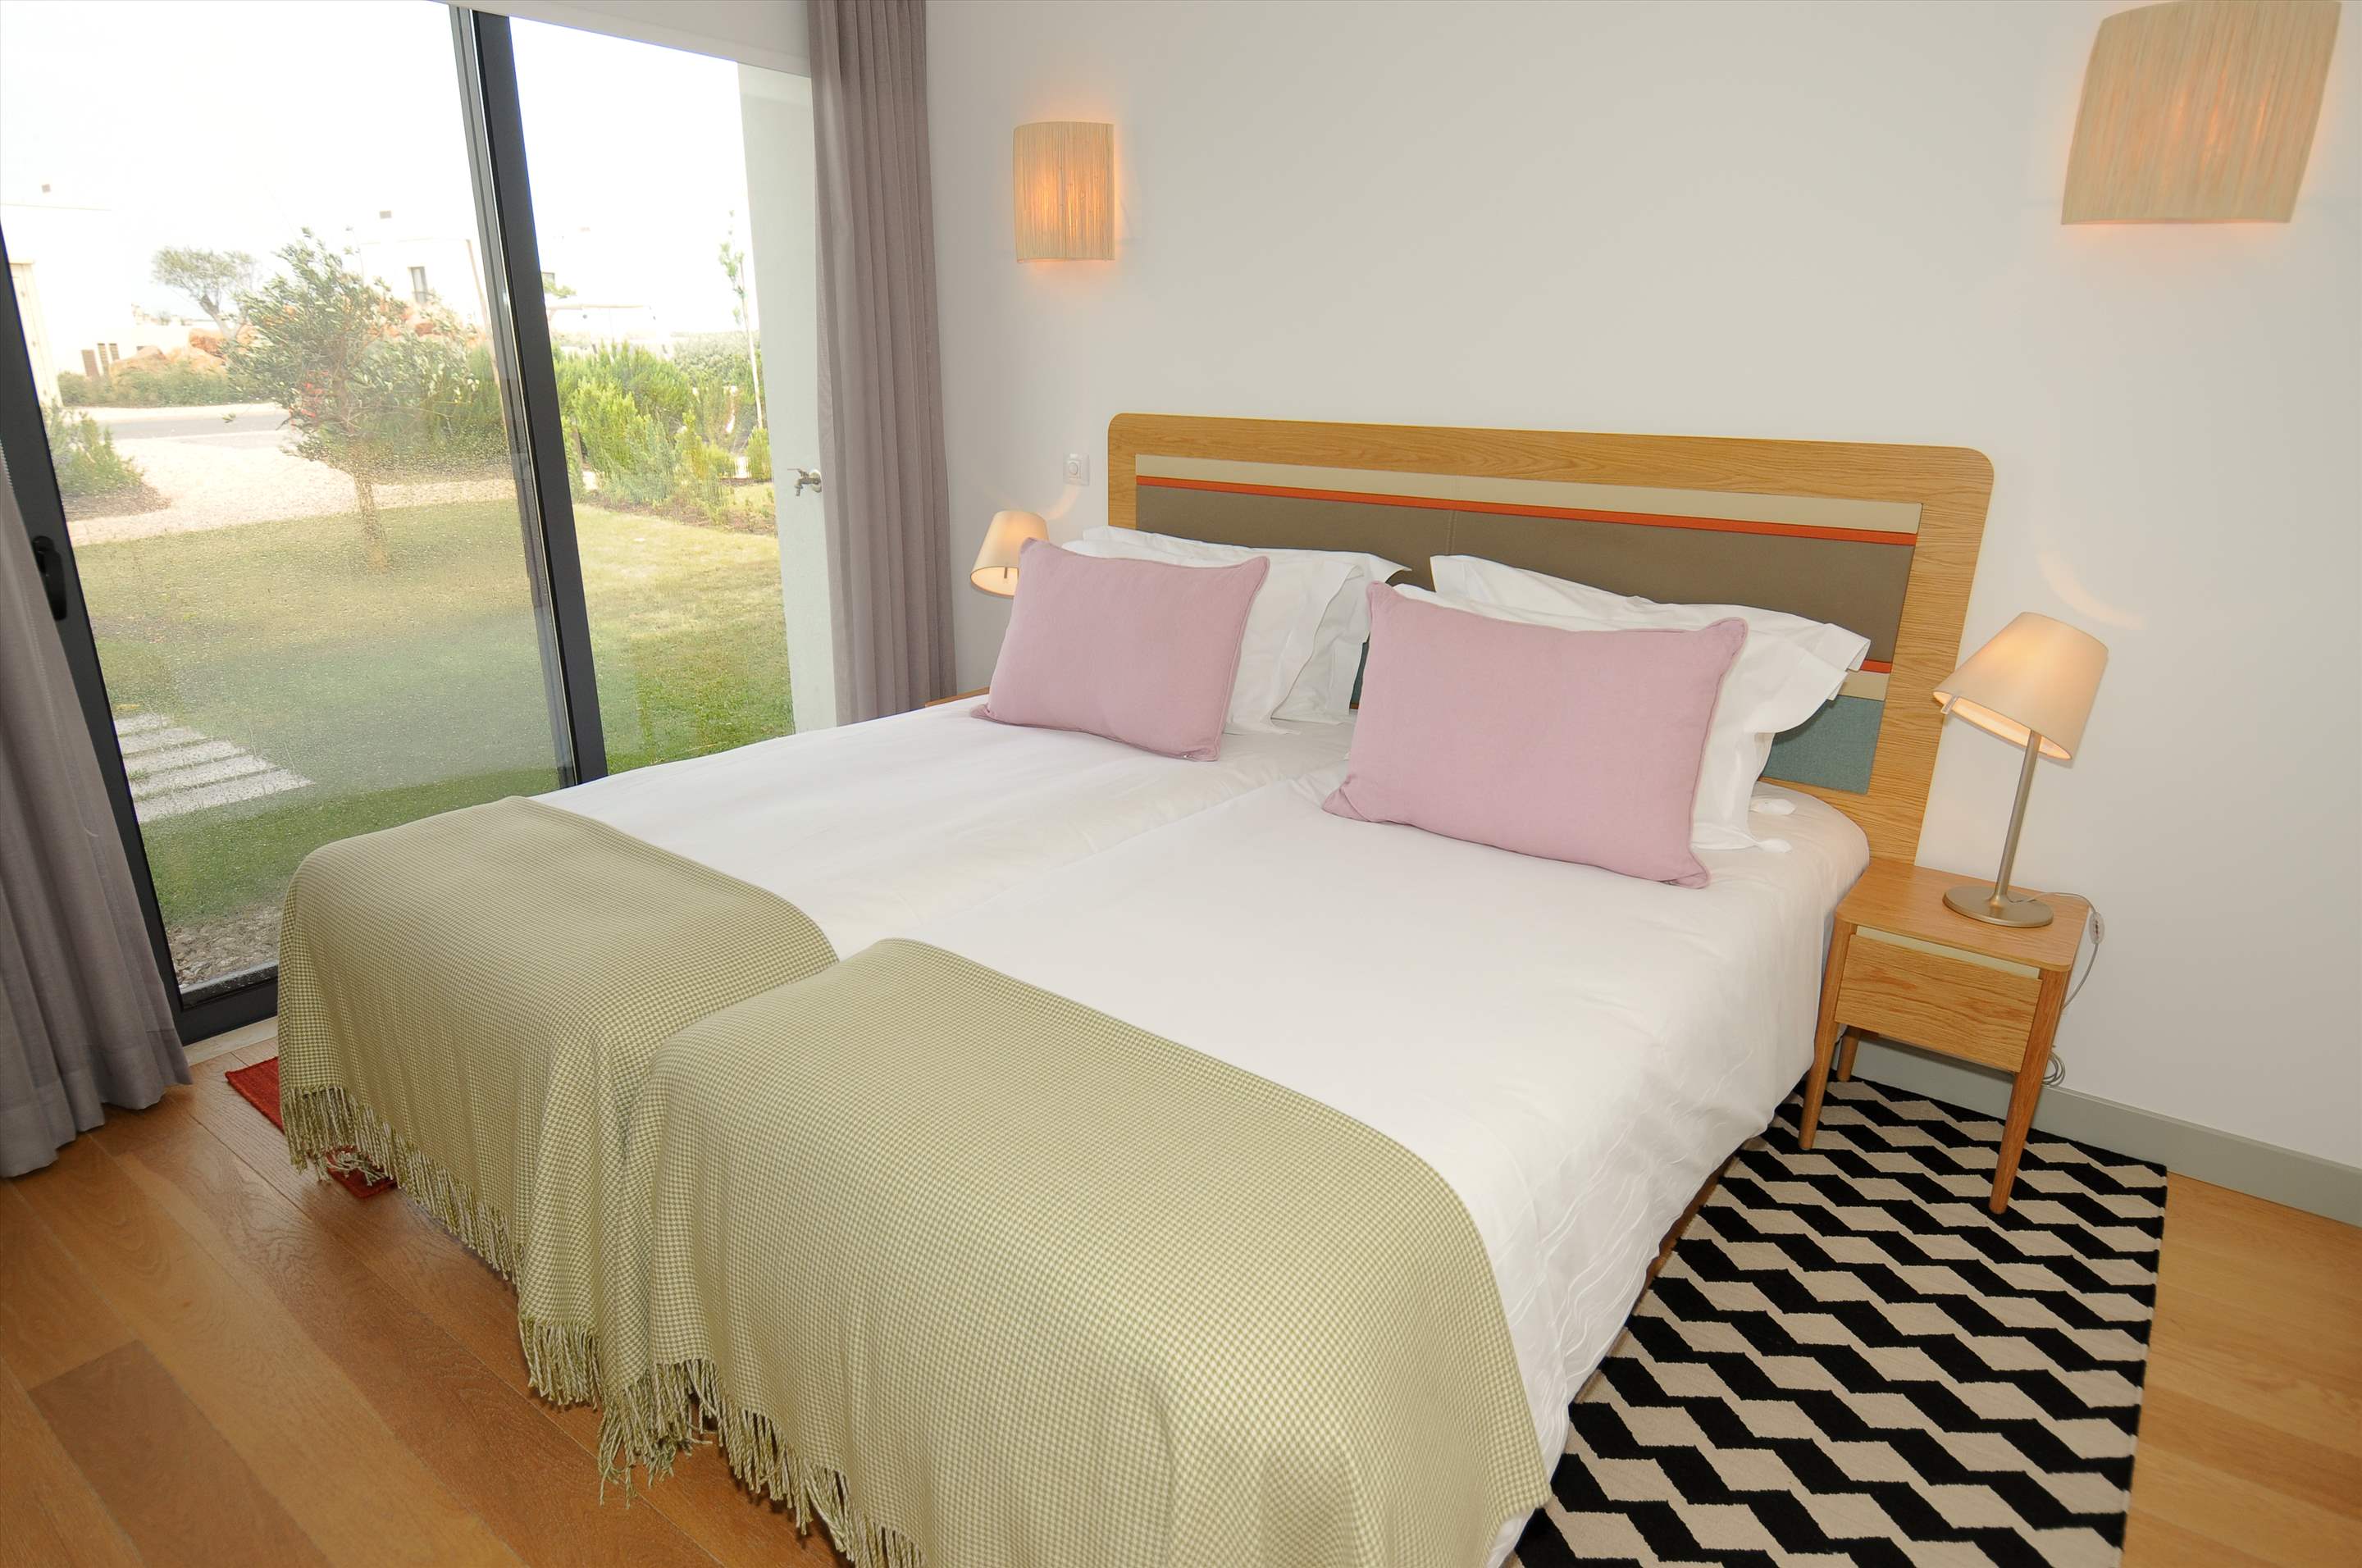 Martinhal Village Bay House, Grand Bay House Two Bedroom, 2 bedroom villa in Martinhal Sagres, Algarve Photo #5